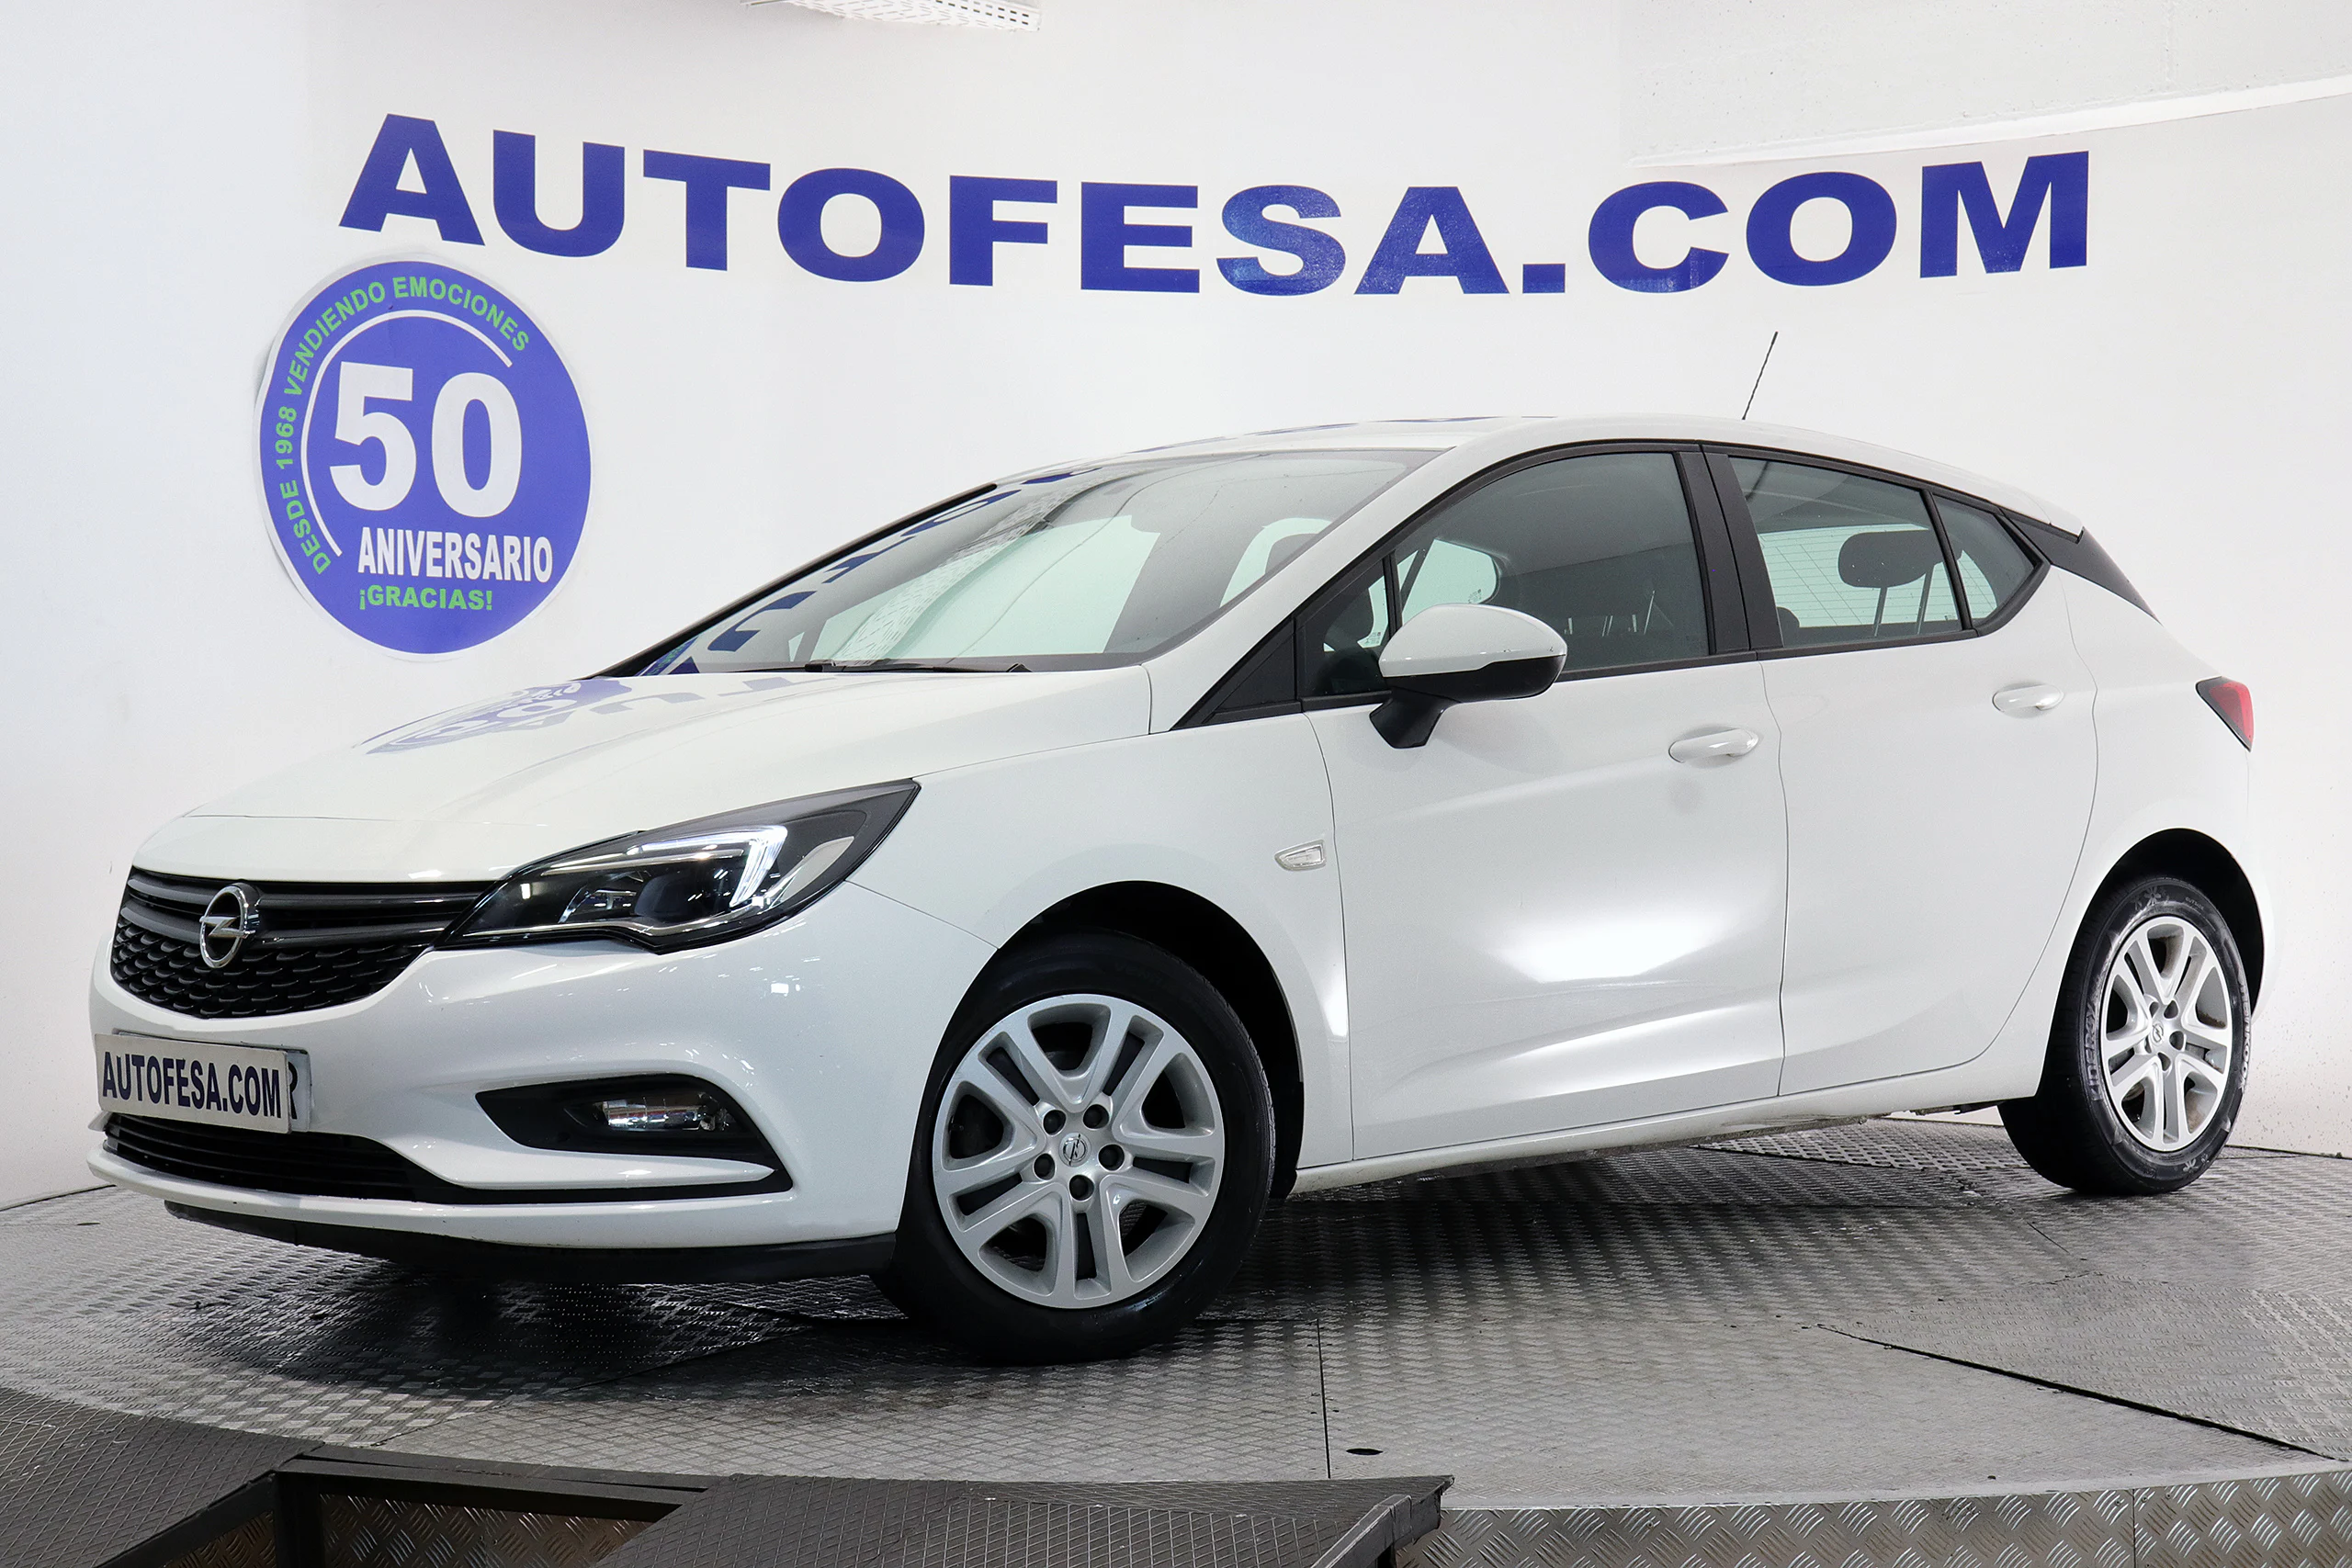 Opel Astra 1.6 CDTi 110cv Selective 5p - Foto 1